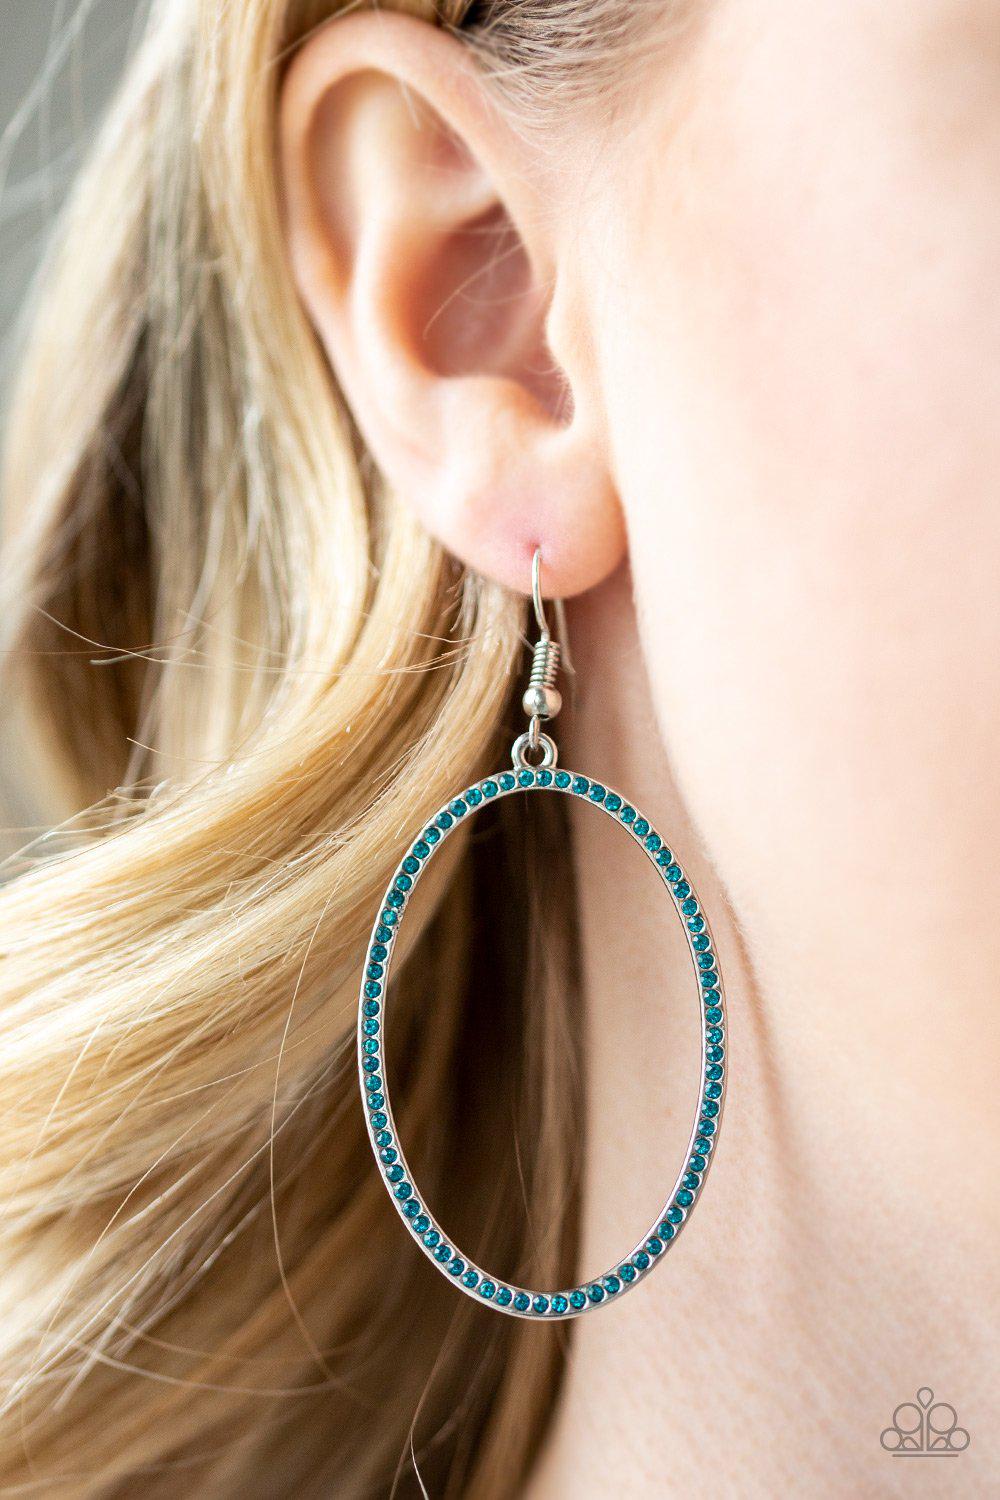 Dazzle On Demand Blue Rhinestone Earrings - Paparazzi Accessories-CarasShop.com - $5 Jewelry by Cara Jewels